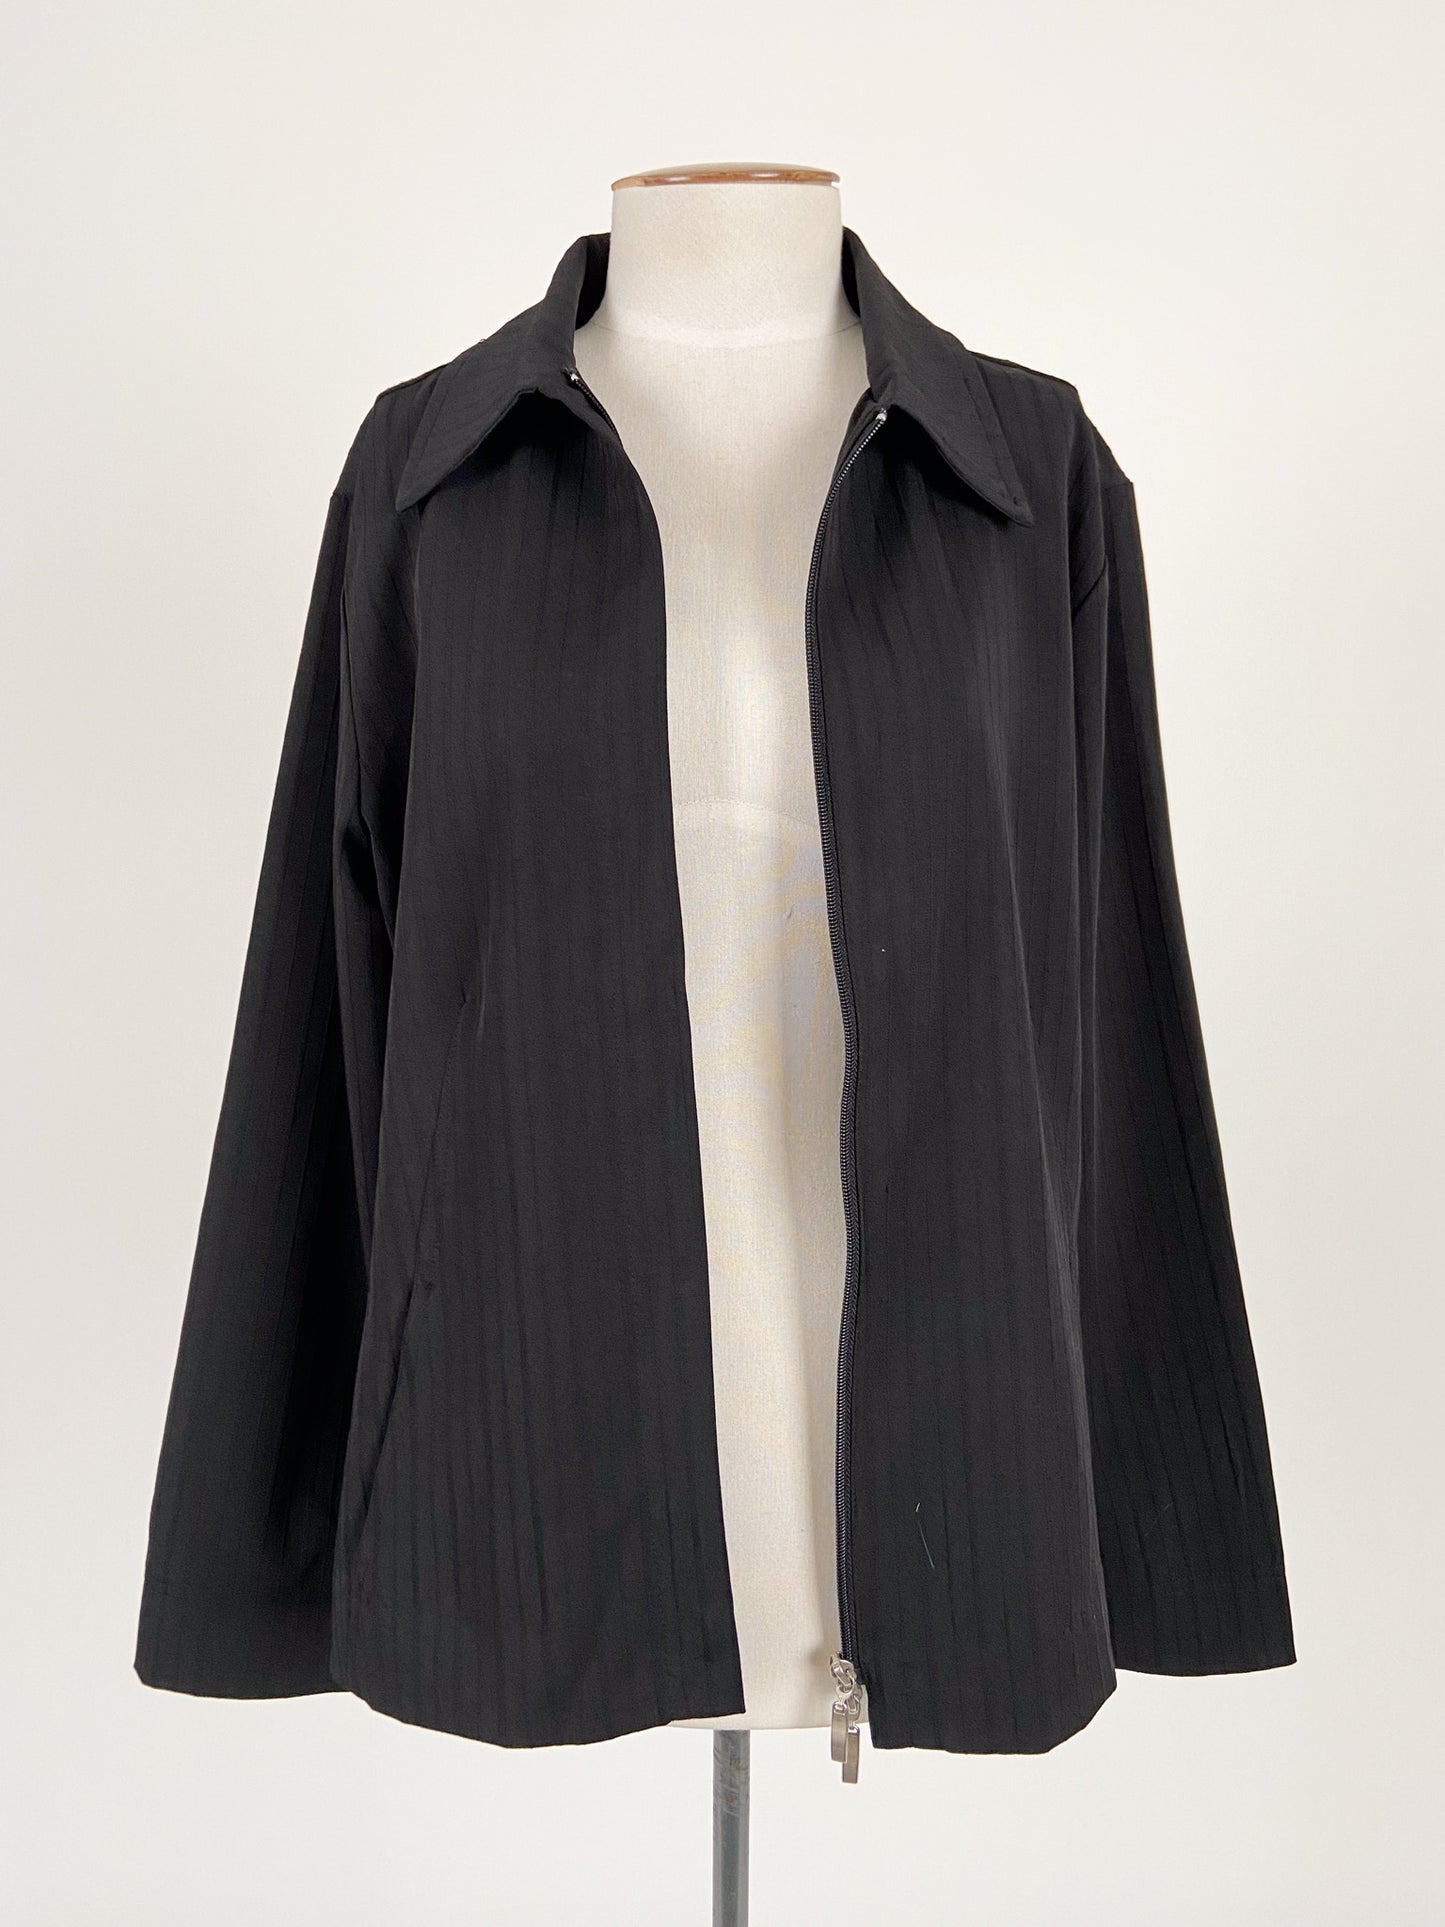 Joanna Morgan | Black Workwear Jacket | Size M